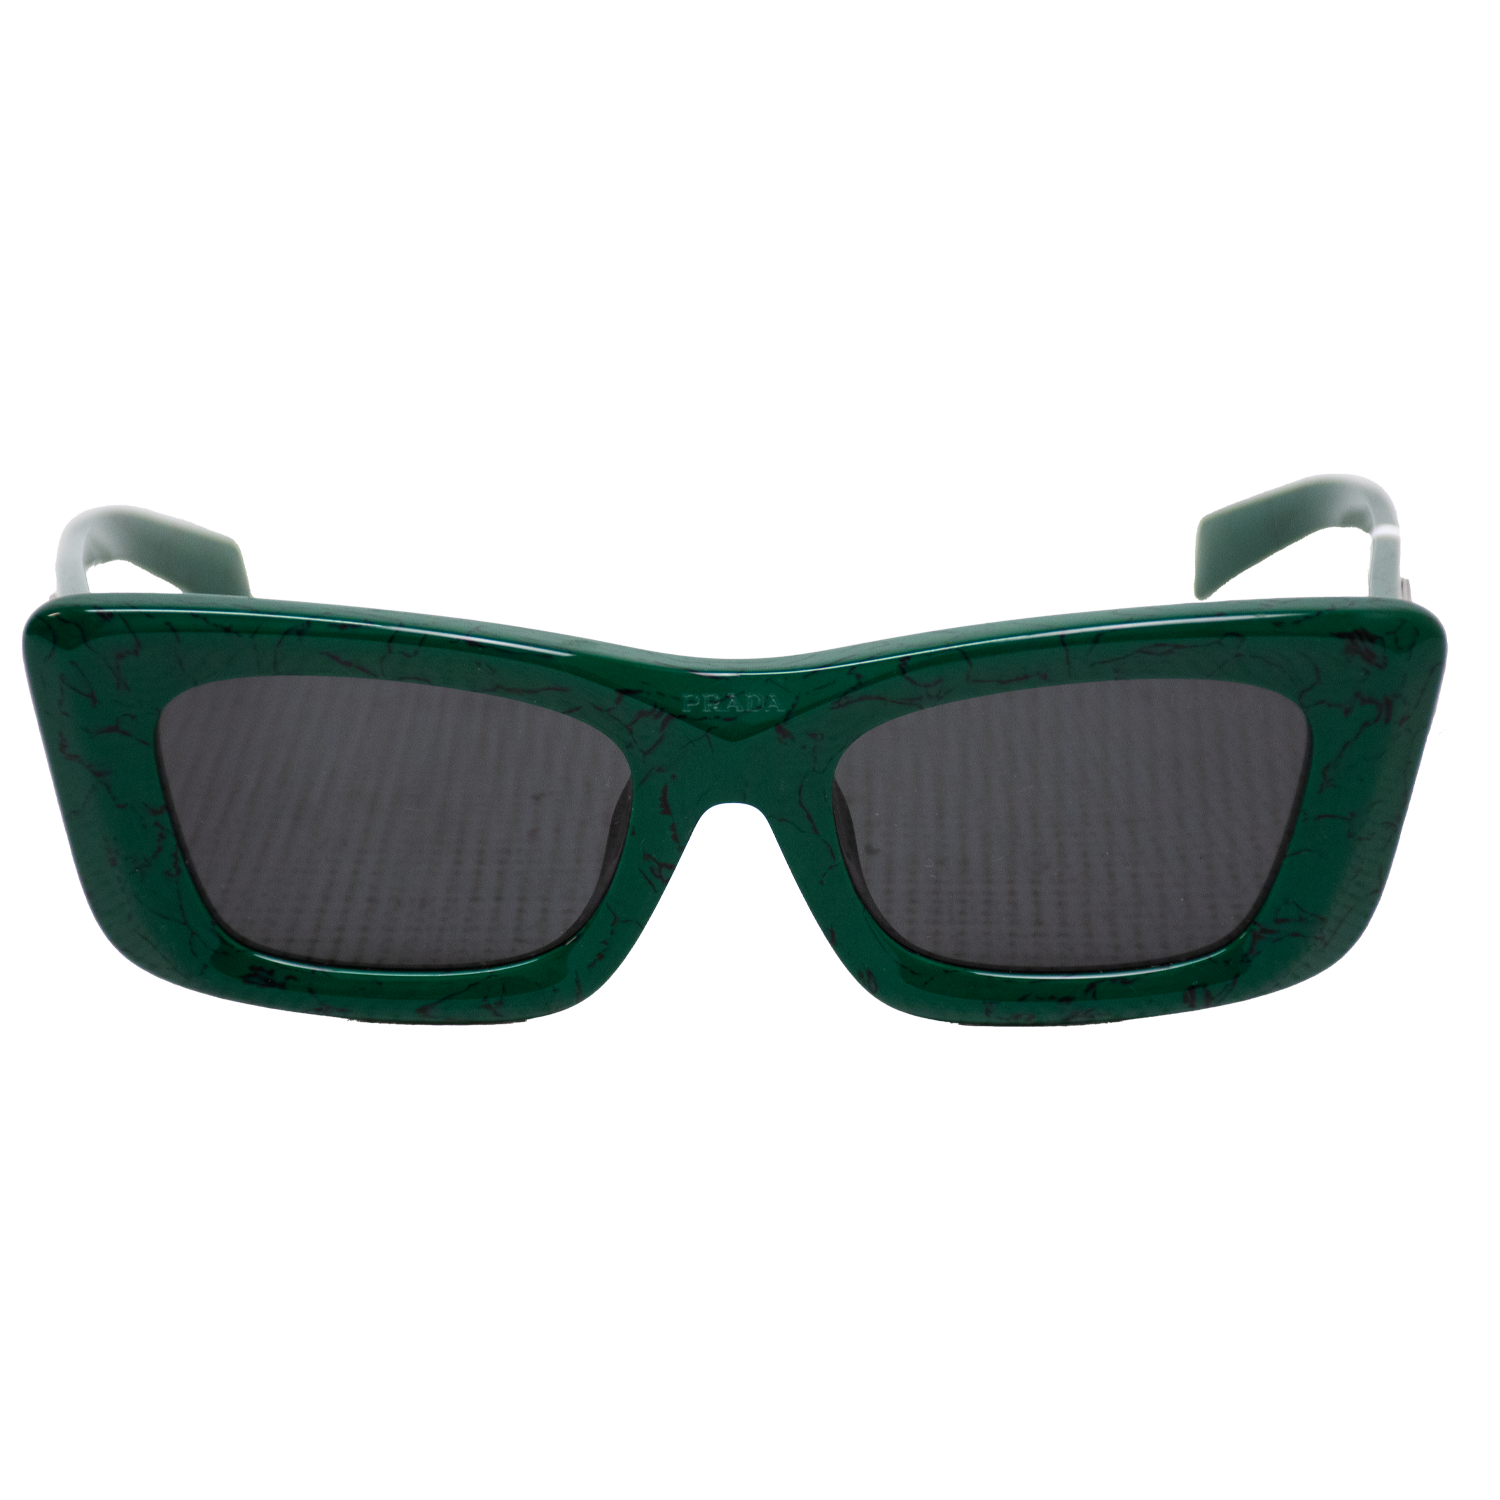 Prada SPR13z Cat Eye Green/Marbly Sunglasses